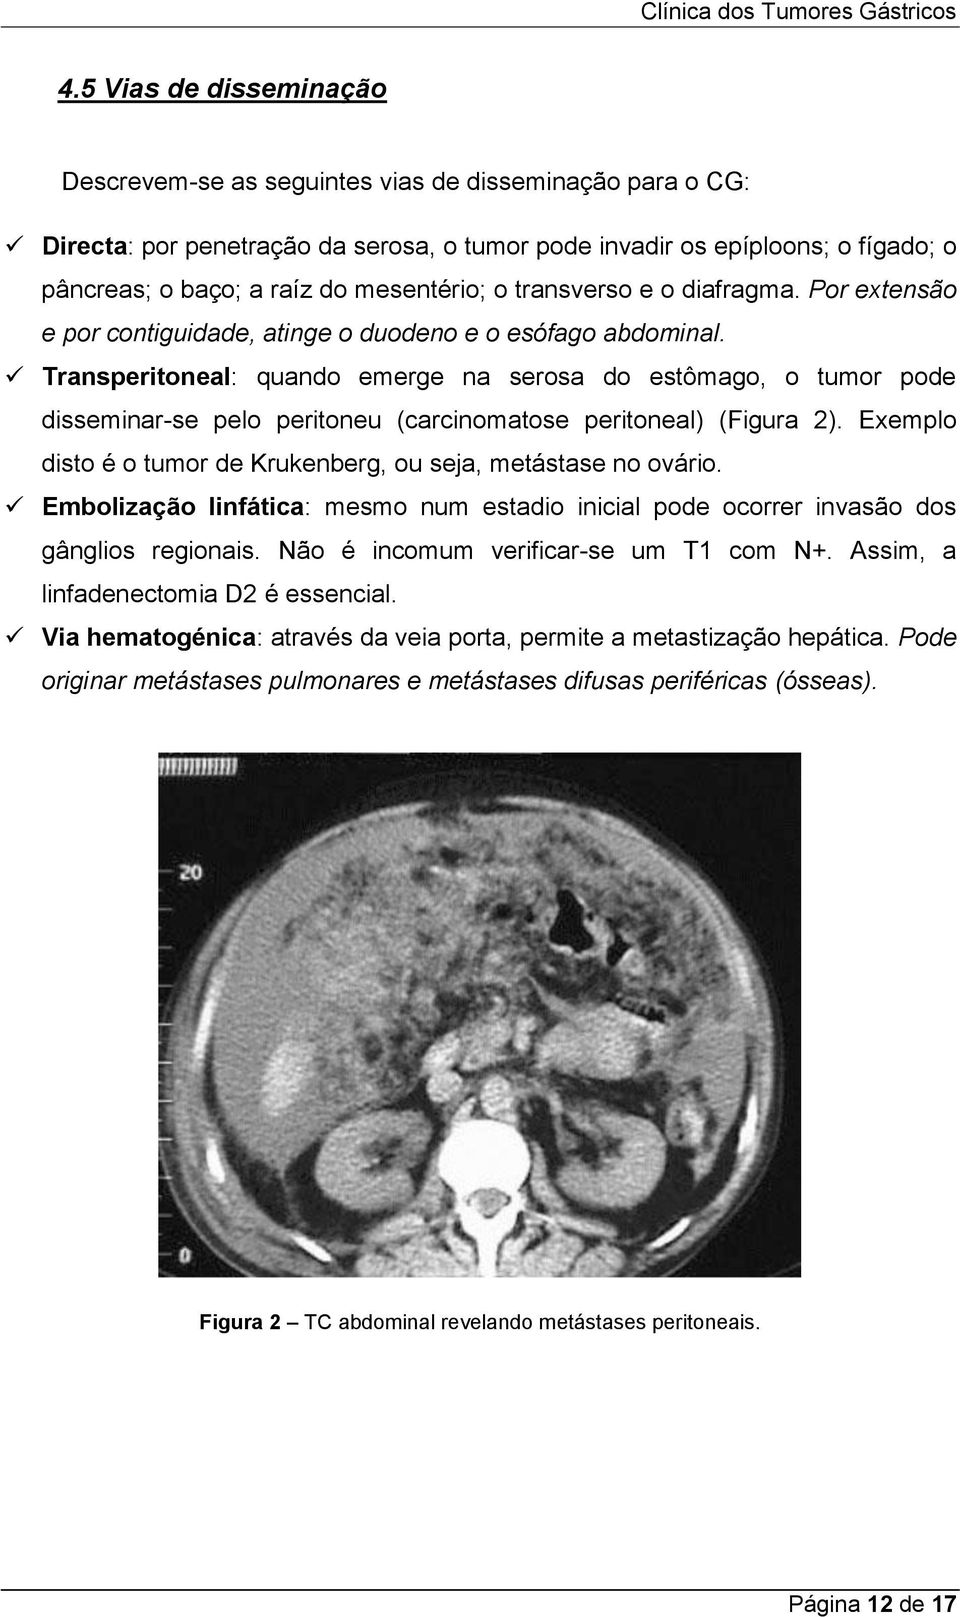 Transperitoneal: quando emerge na serosa do estômago, o tumor pode disseminar-se pelo peritoneu (carcinomatose peritoneal) (Figura 2).